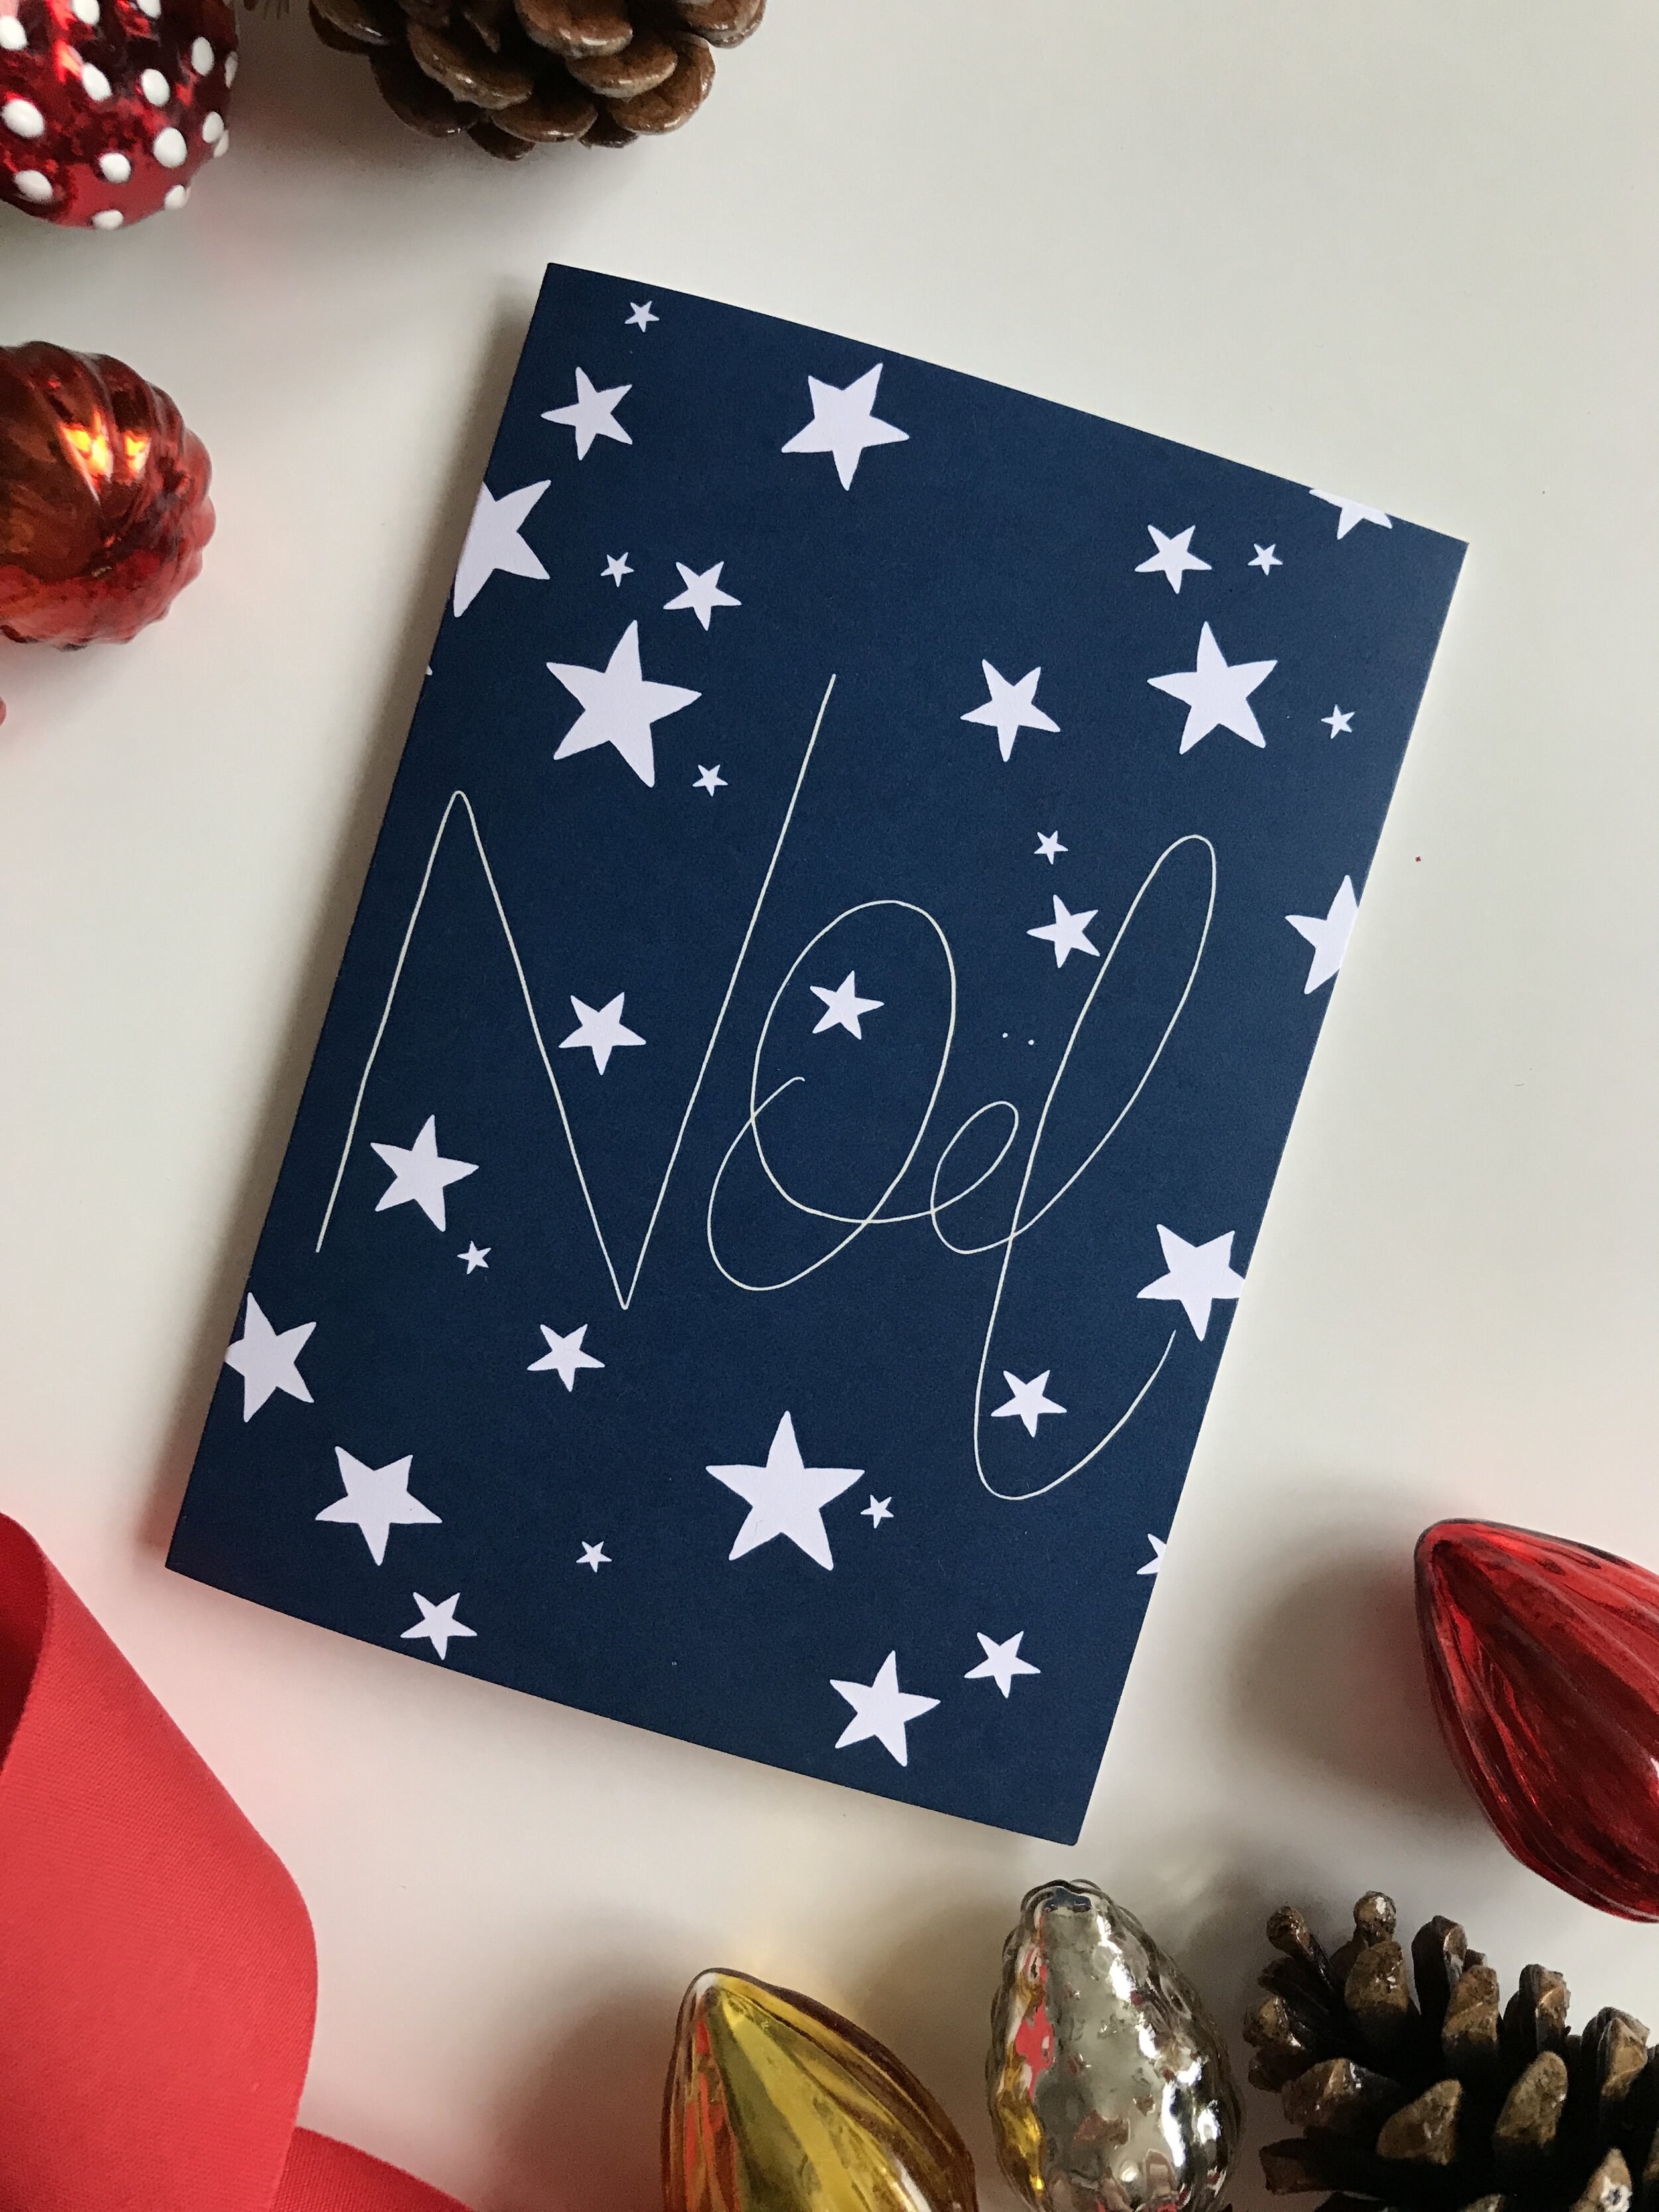 Noël Christmas Card with stars